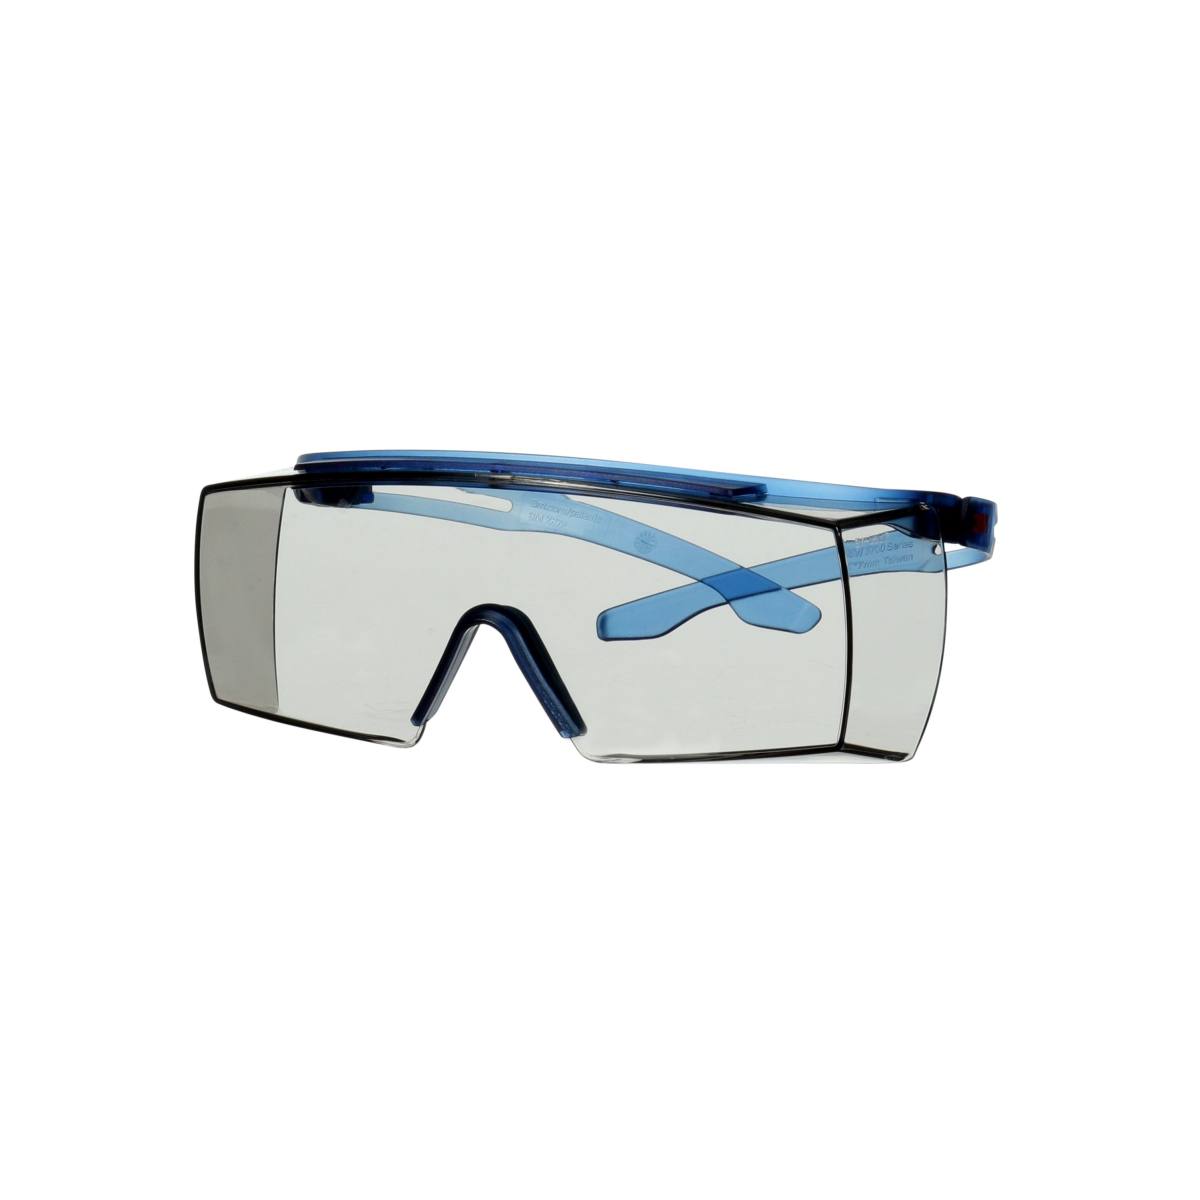 3M SecureFit 3700 goggles, blue temples, Scotchgard anti-fog coating (K&amp;N), grey lens for indoor/outdoor use, SF3707SGAF-BLU-EU